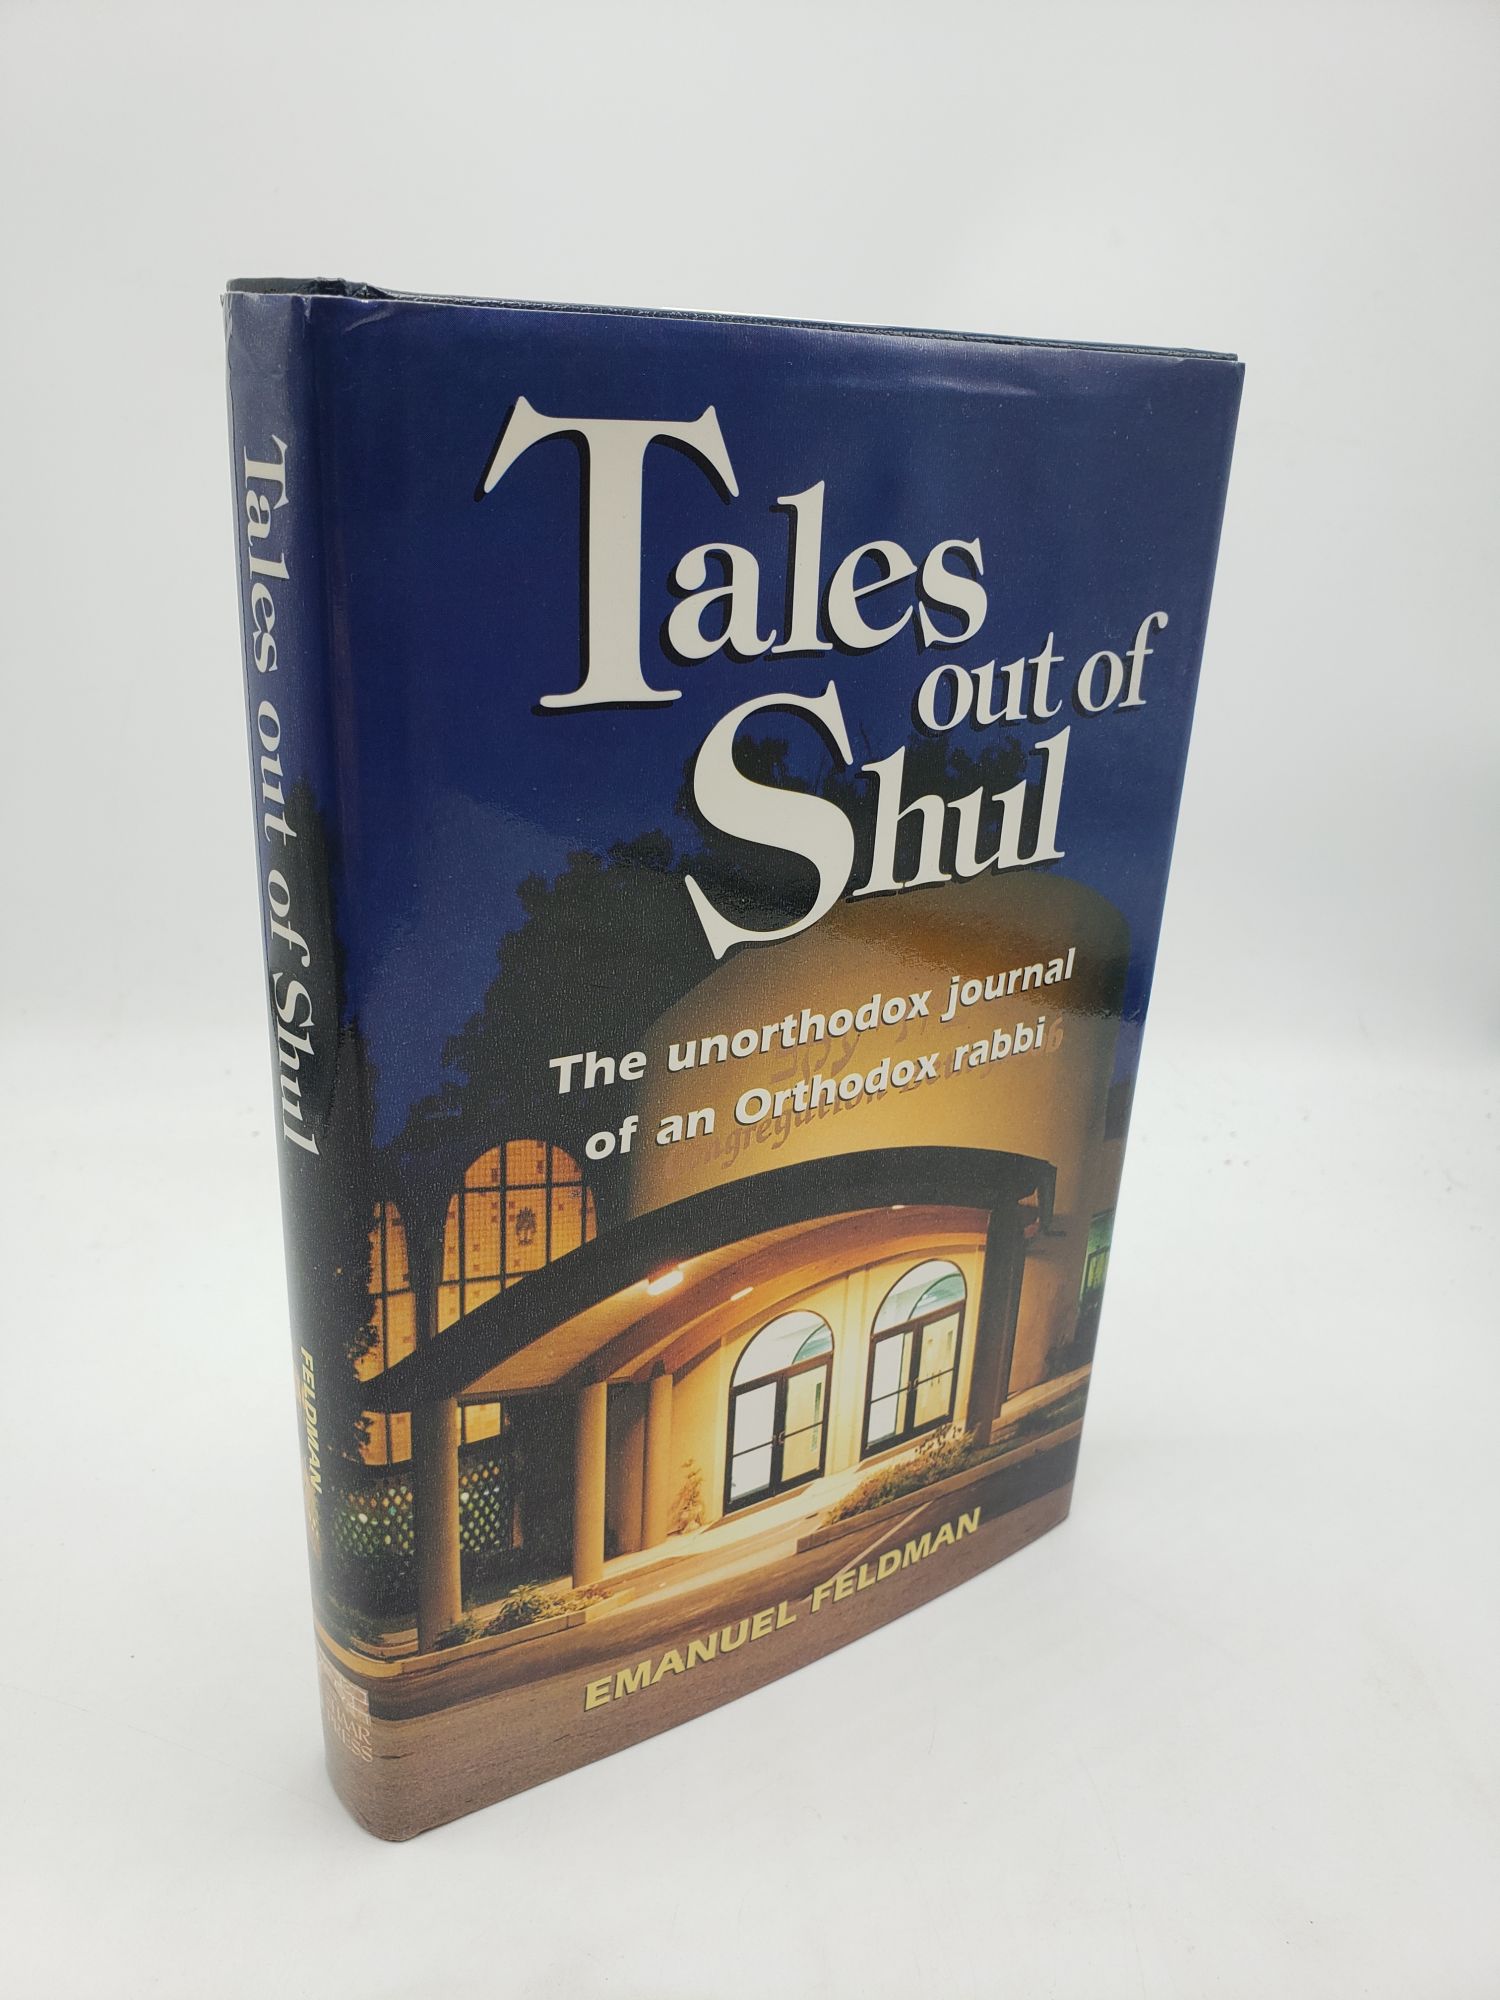 Tales Out of Shul: The Unorthodox Journal of an Orthodox Rabbi - Emanuel Feldman